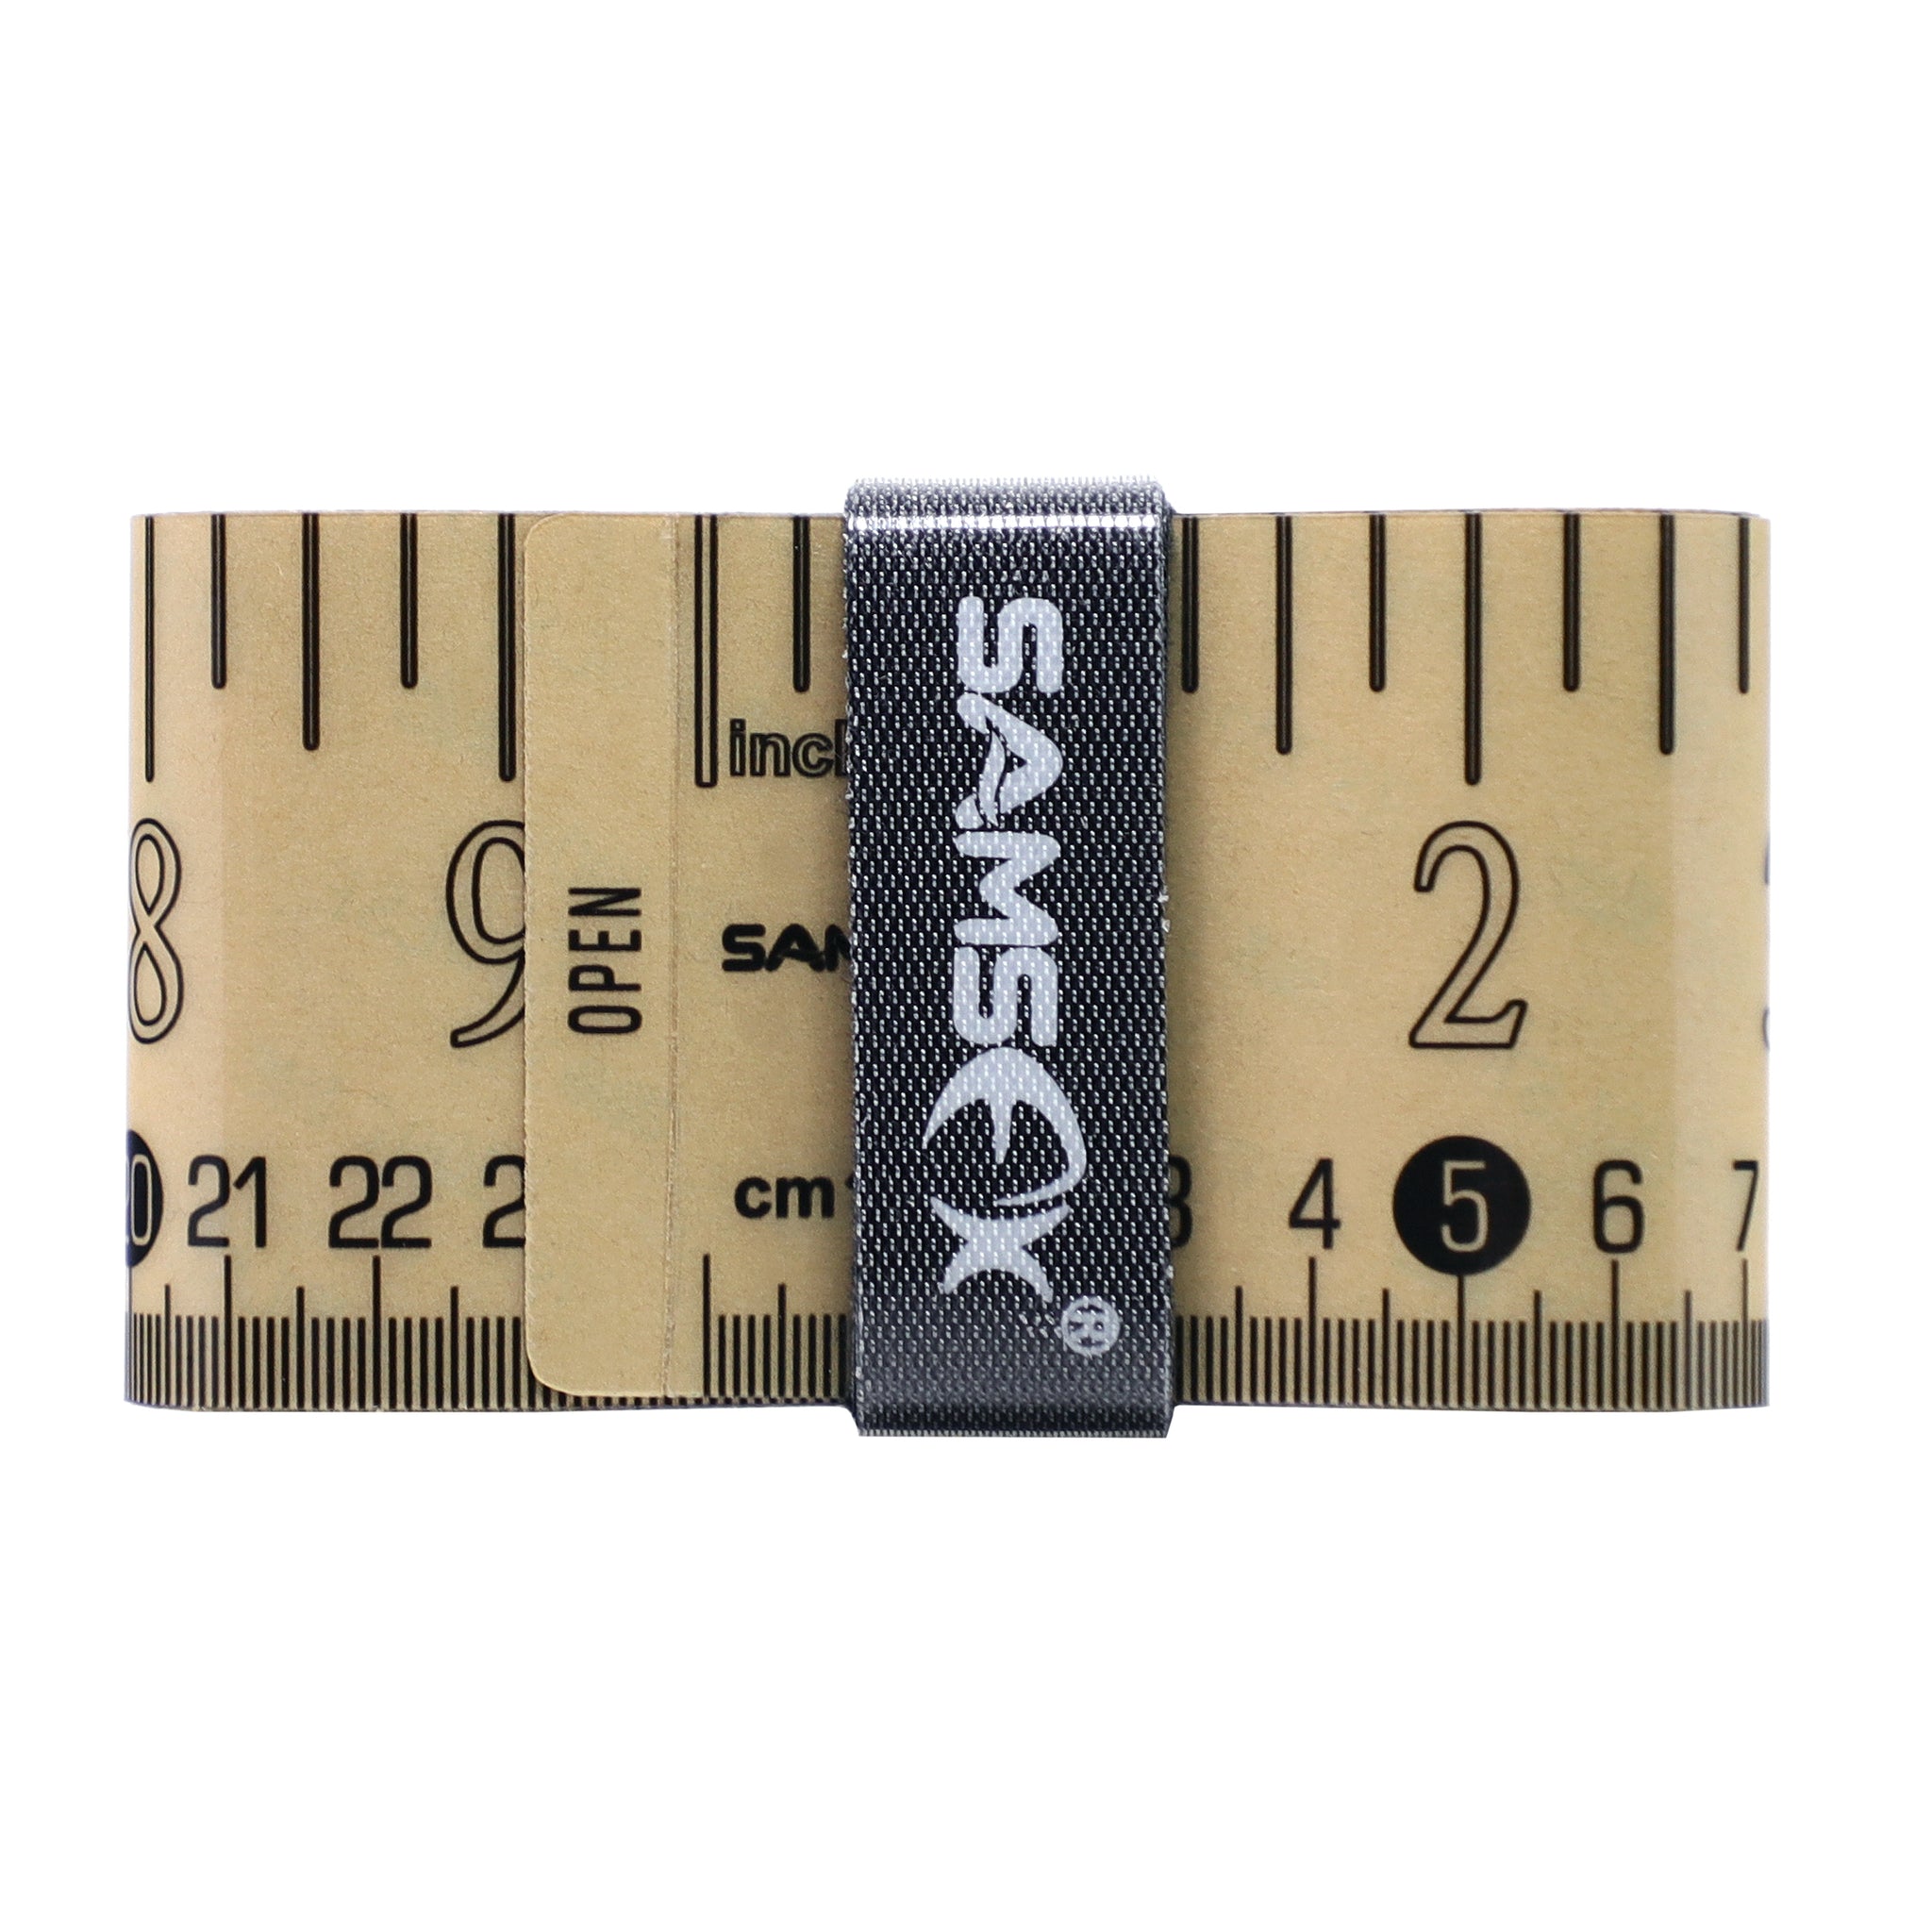 Quik Measure Pro Fish Rulers Rod Decals 2 Pack Fishing Rod Adhesive Tape Measure